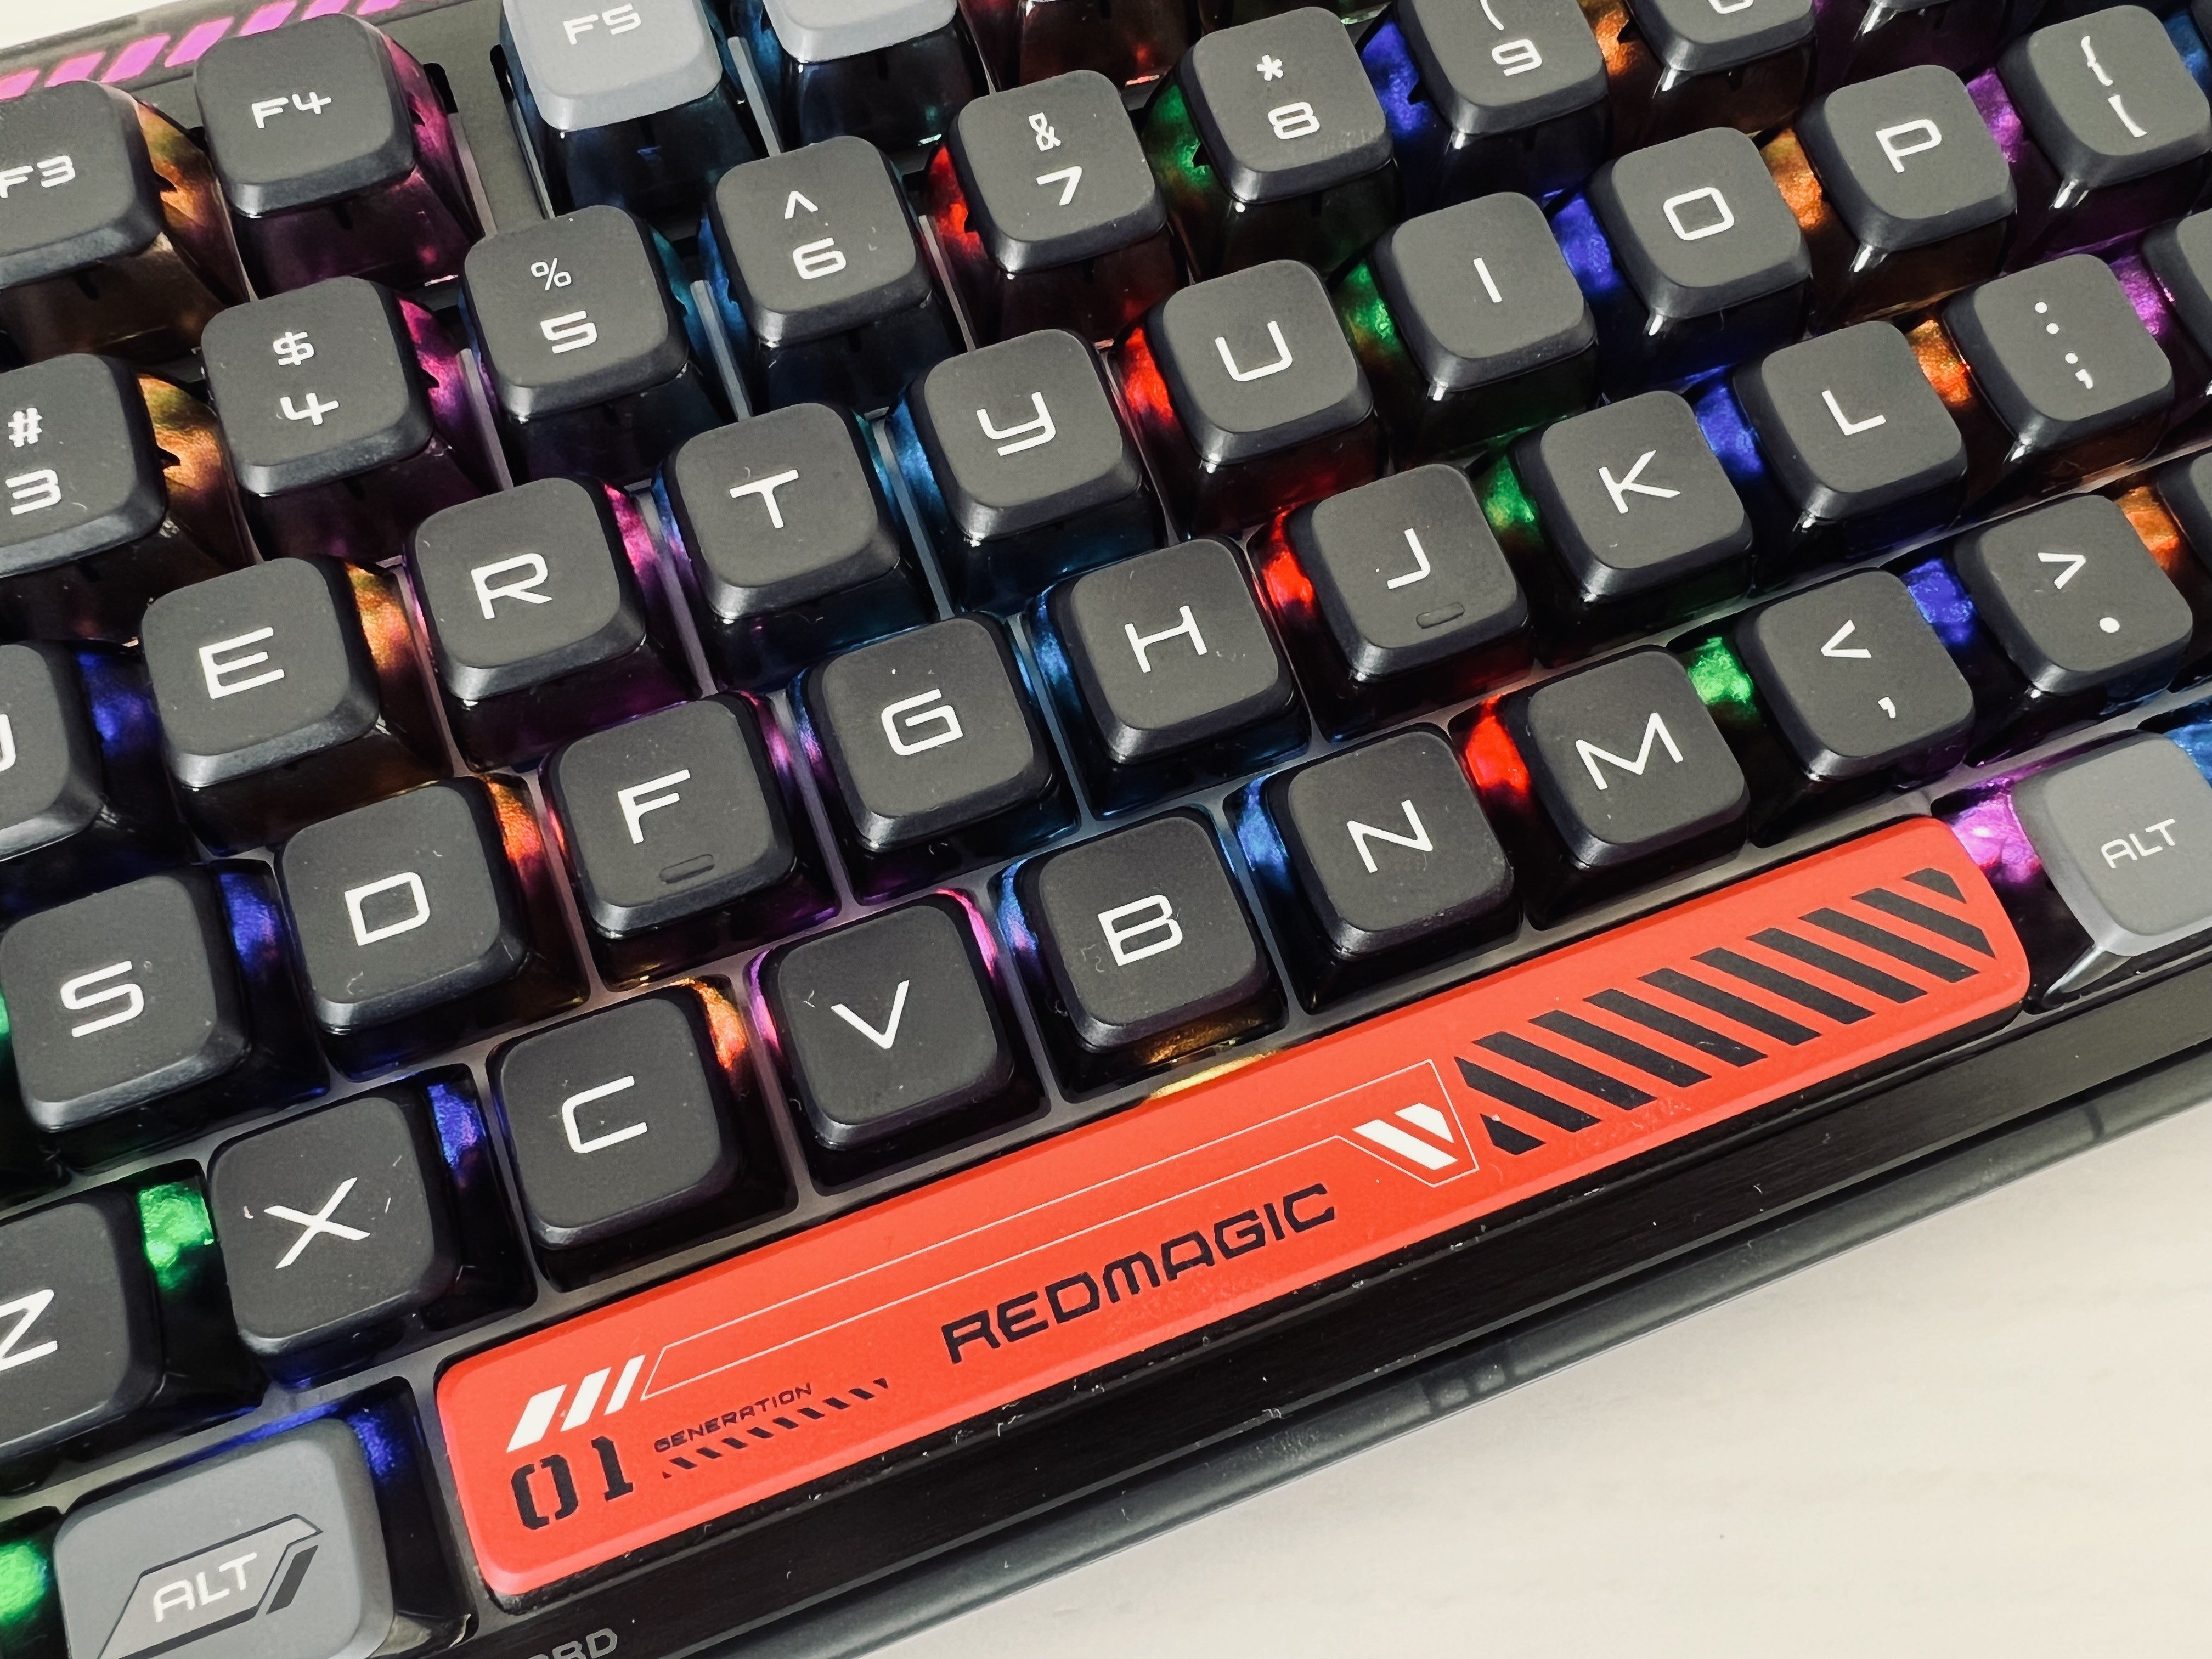 RedMagic Mechanical Gaming Keyboard